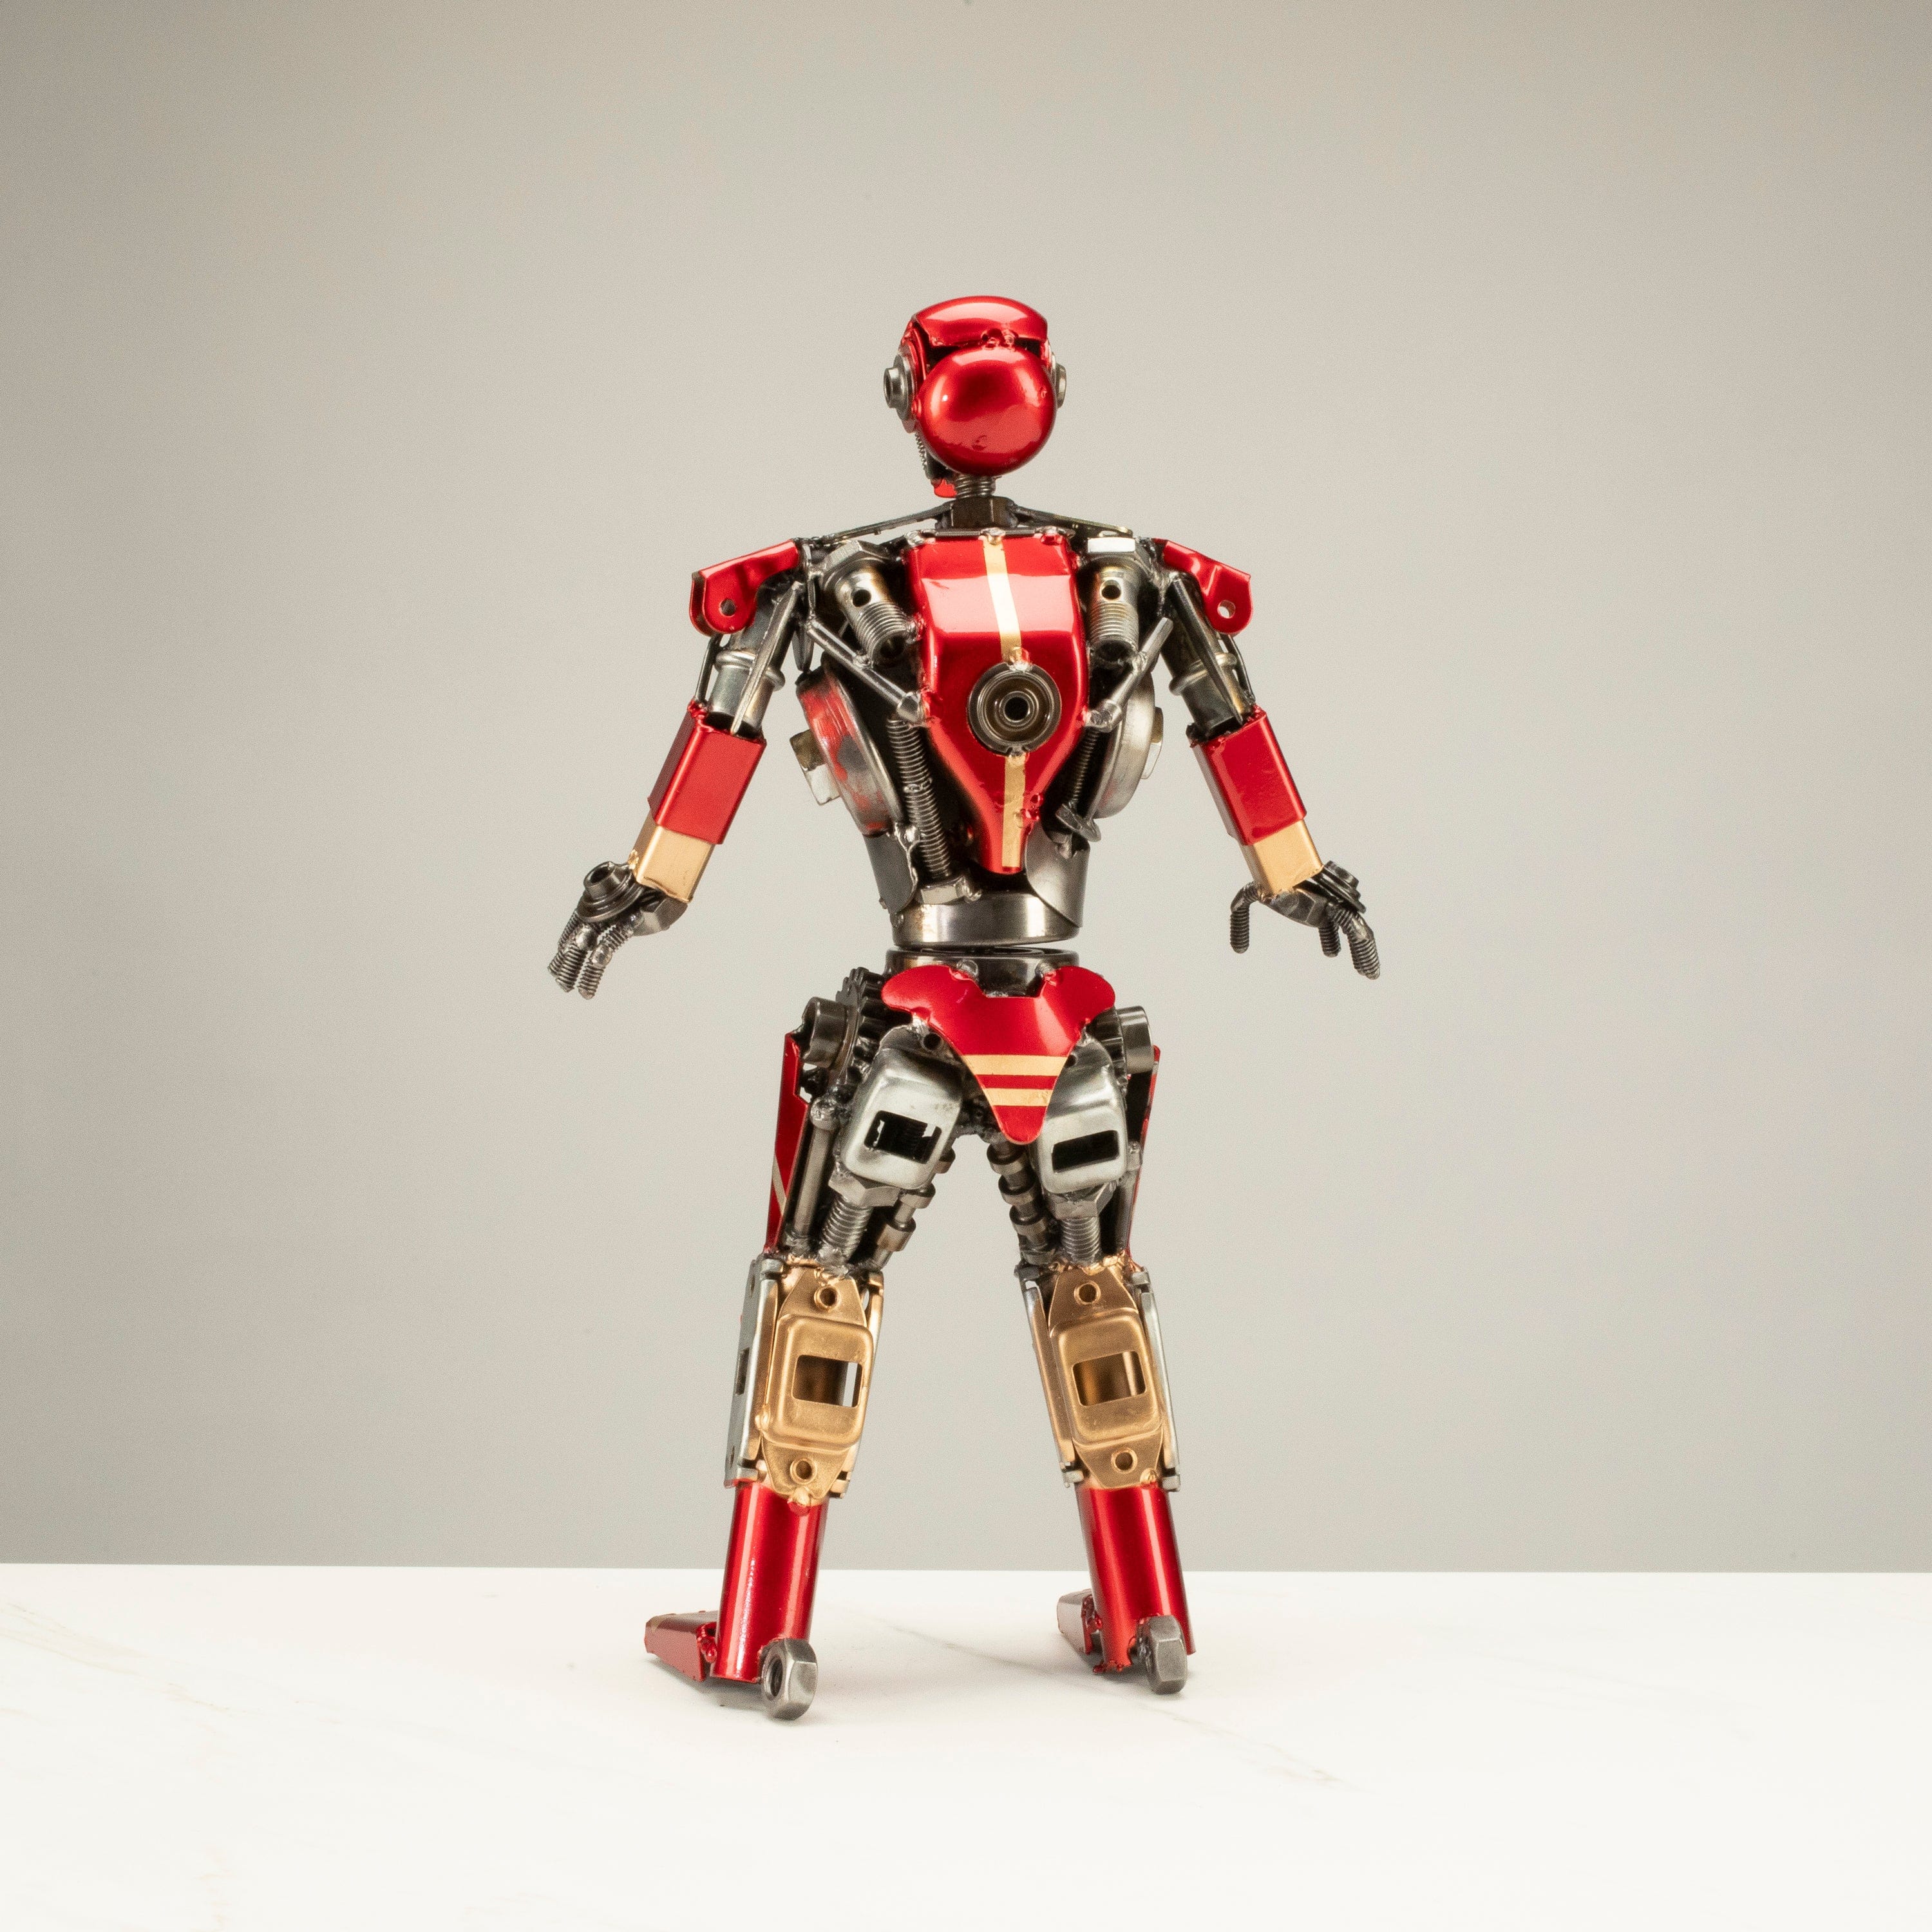 Kalifano Recycled Metal Art 16" Iron Man Inspired Recycled Metal Art Sculpture RMS-IMR41-S